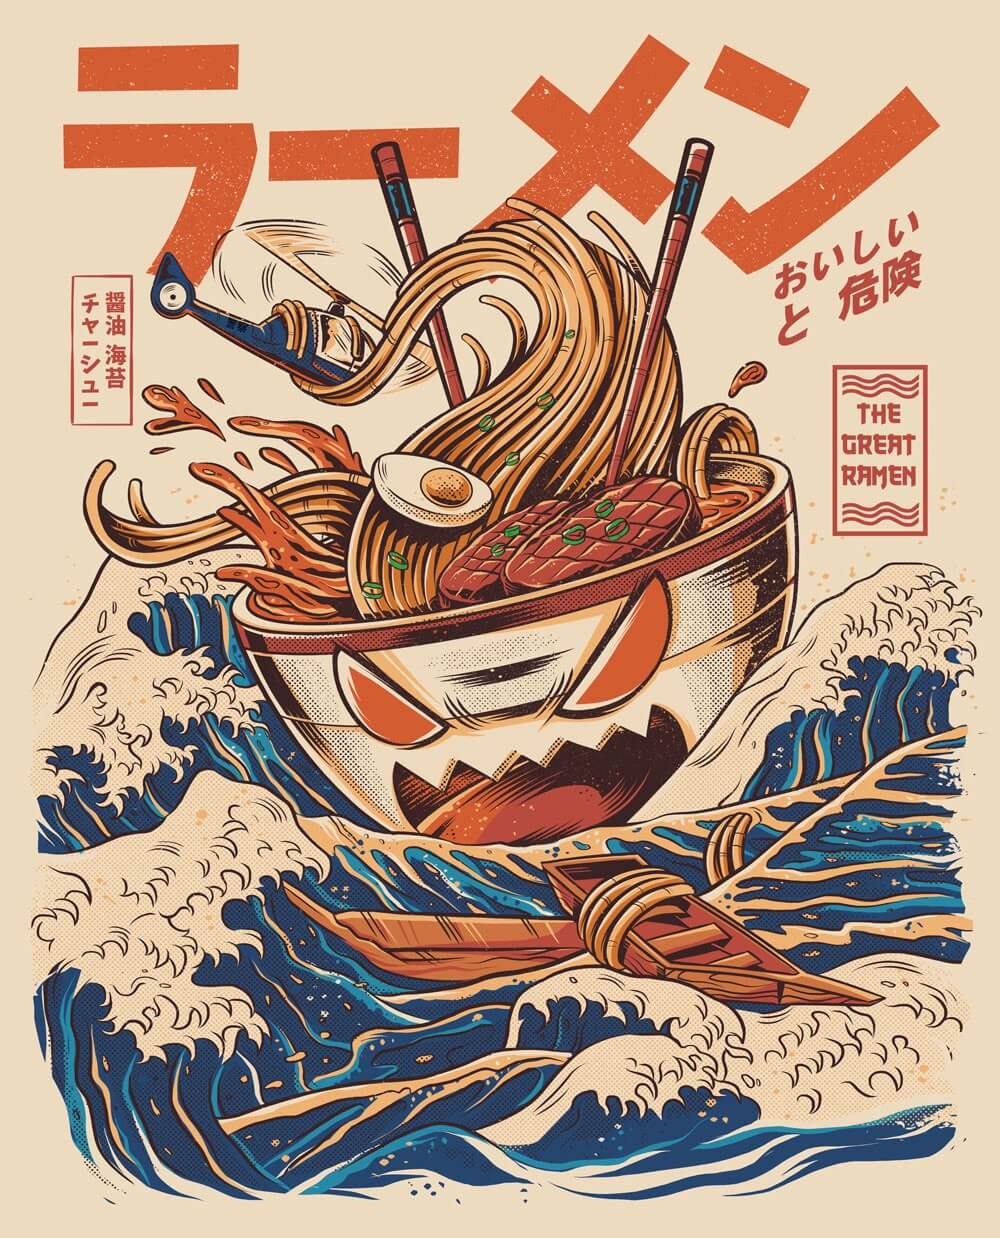 The Great Ramen off Kanagawa, inspired by The Great Wave off Kanagawa